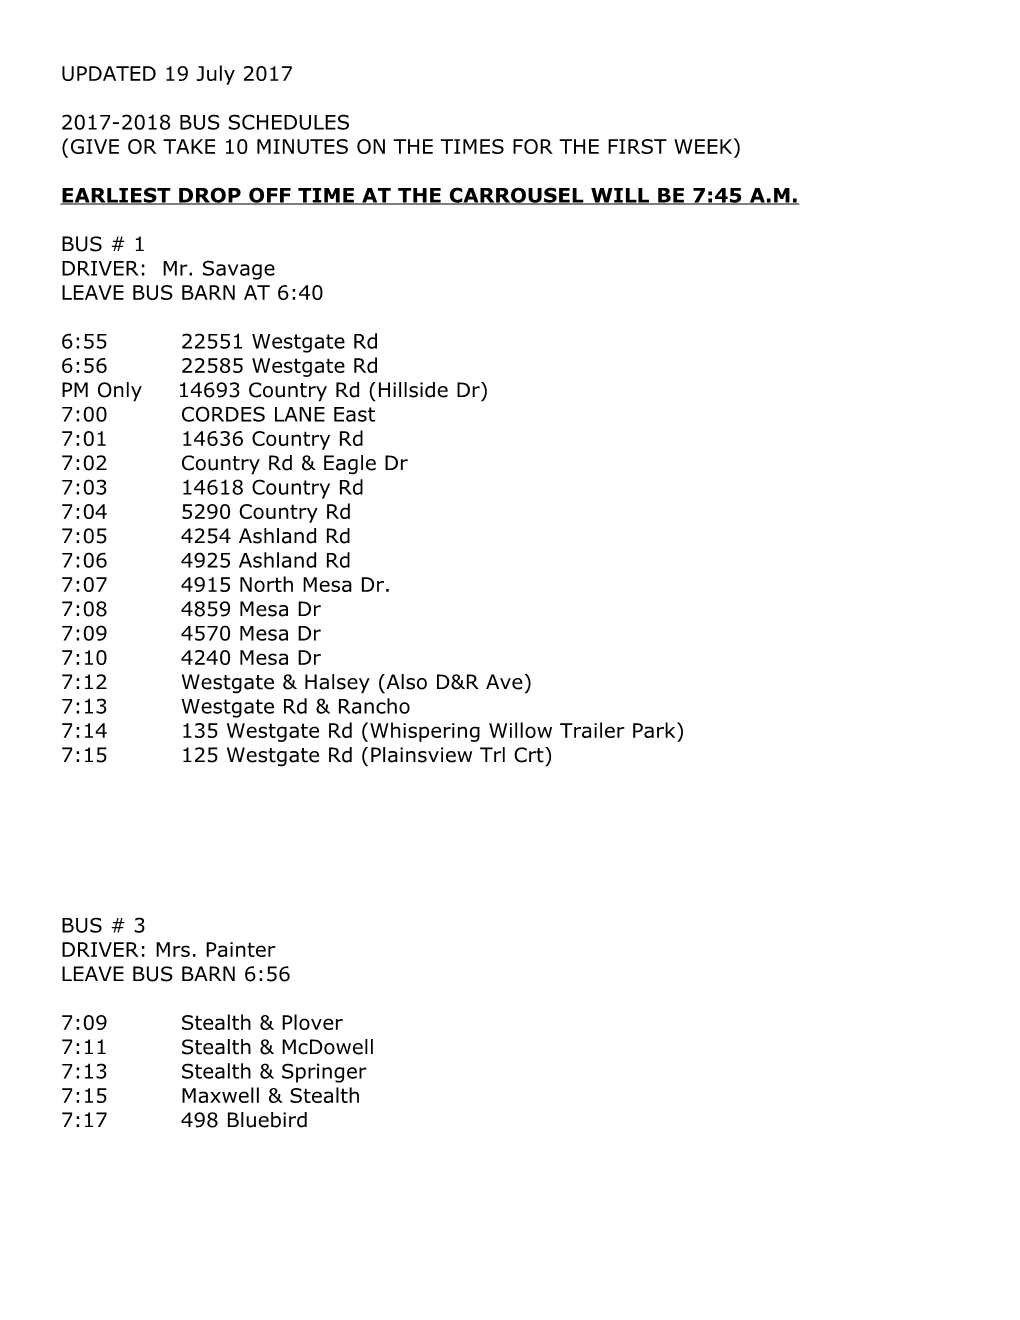 Tentative 2003-2004 Bus Schedules s1